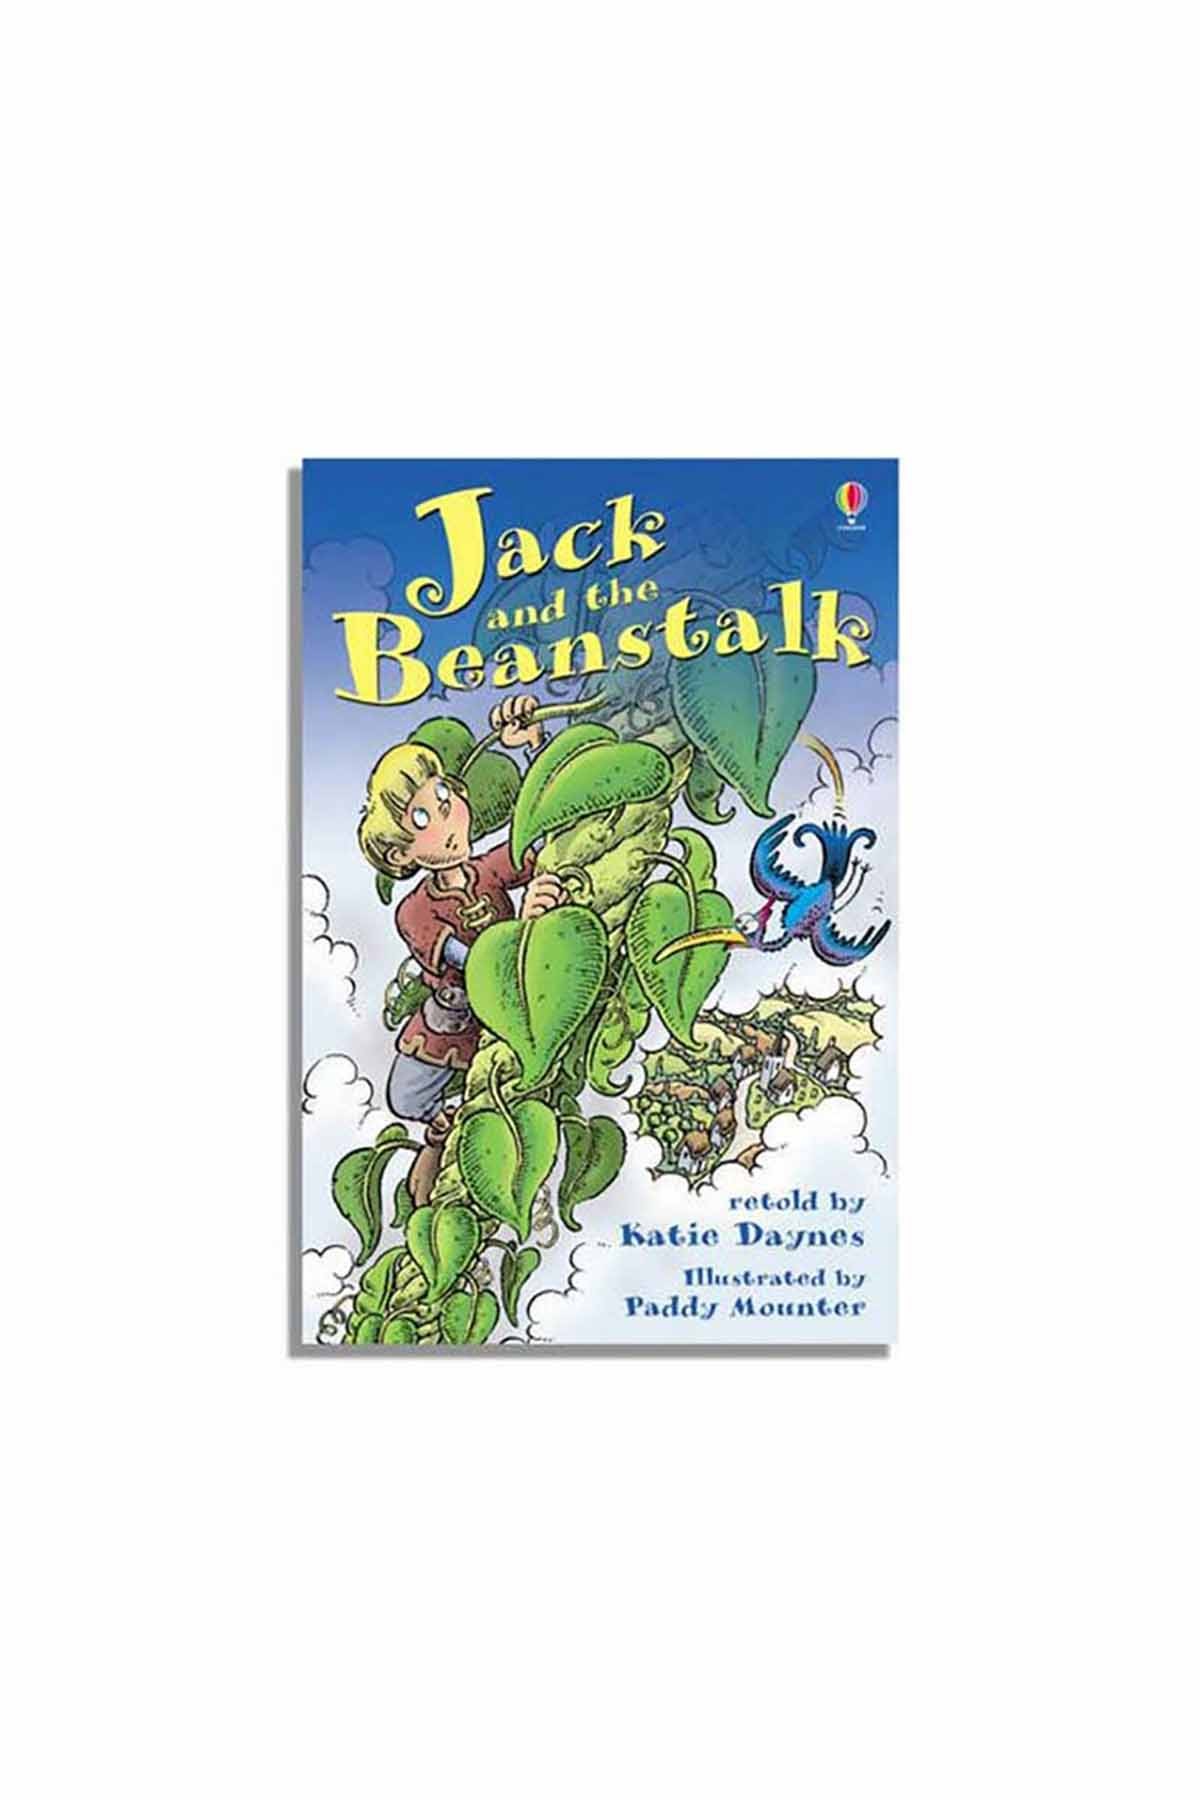 The Usborne Jack and the Beanstalk